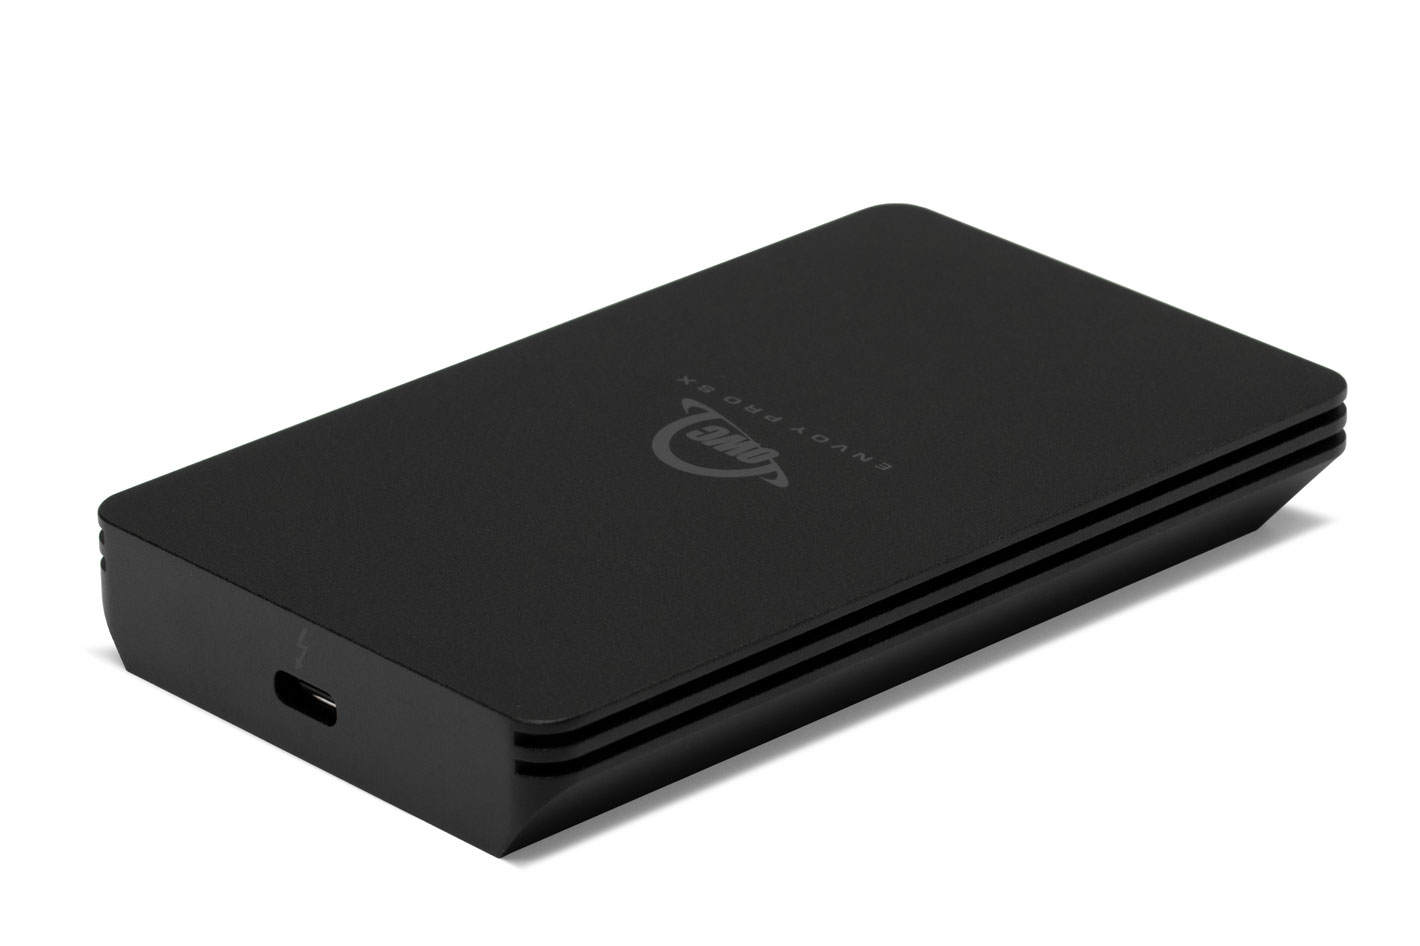 OWC Envoy Pro SX: a new Thunderbolt bus-powered portable SSD